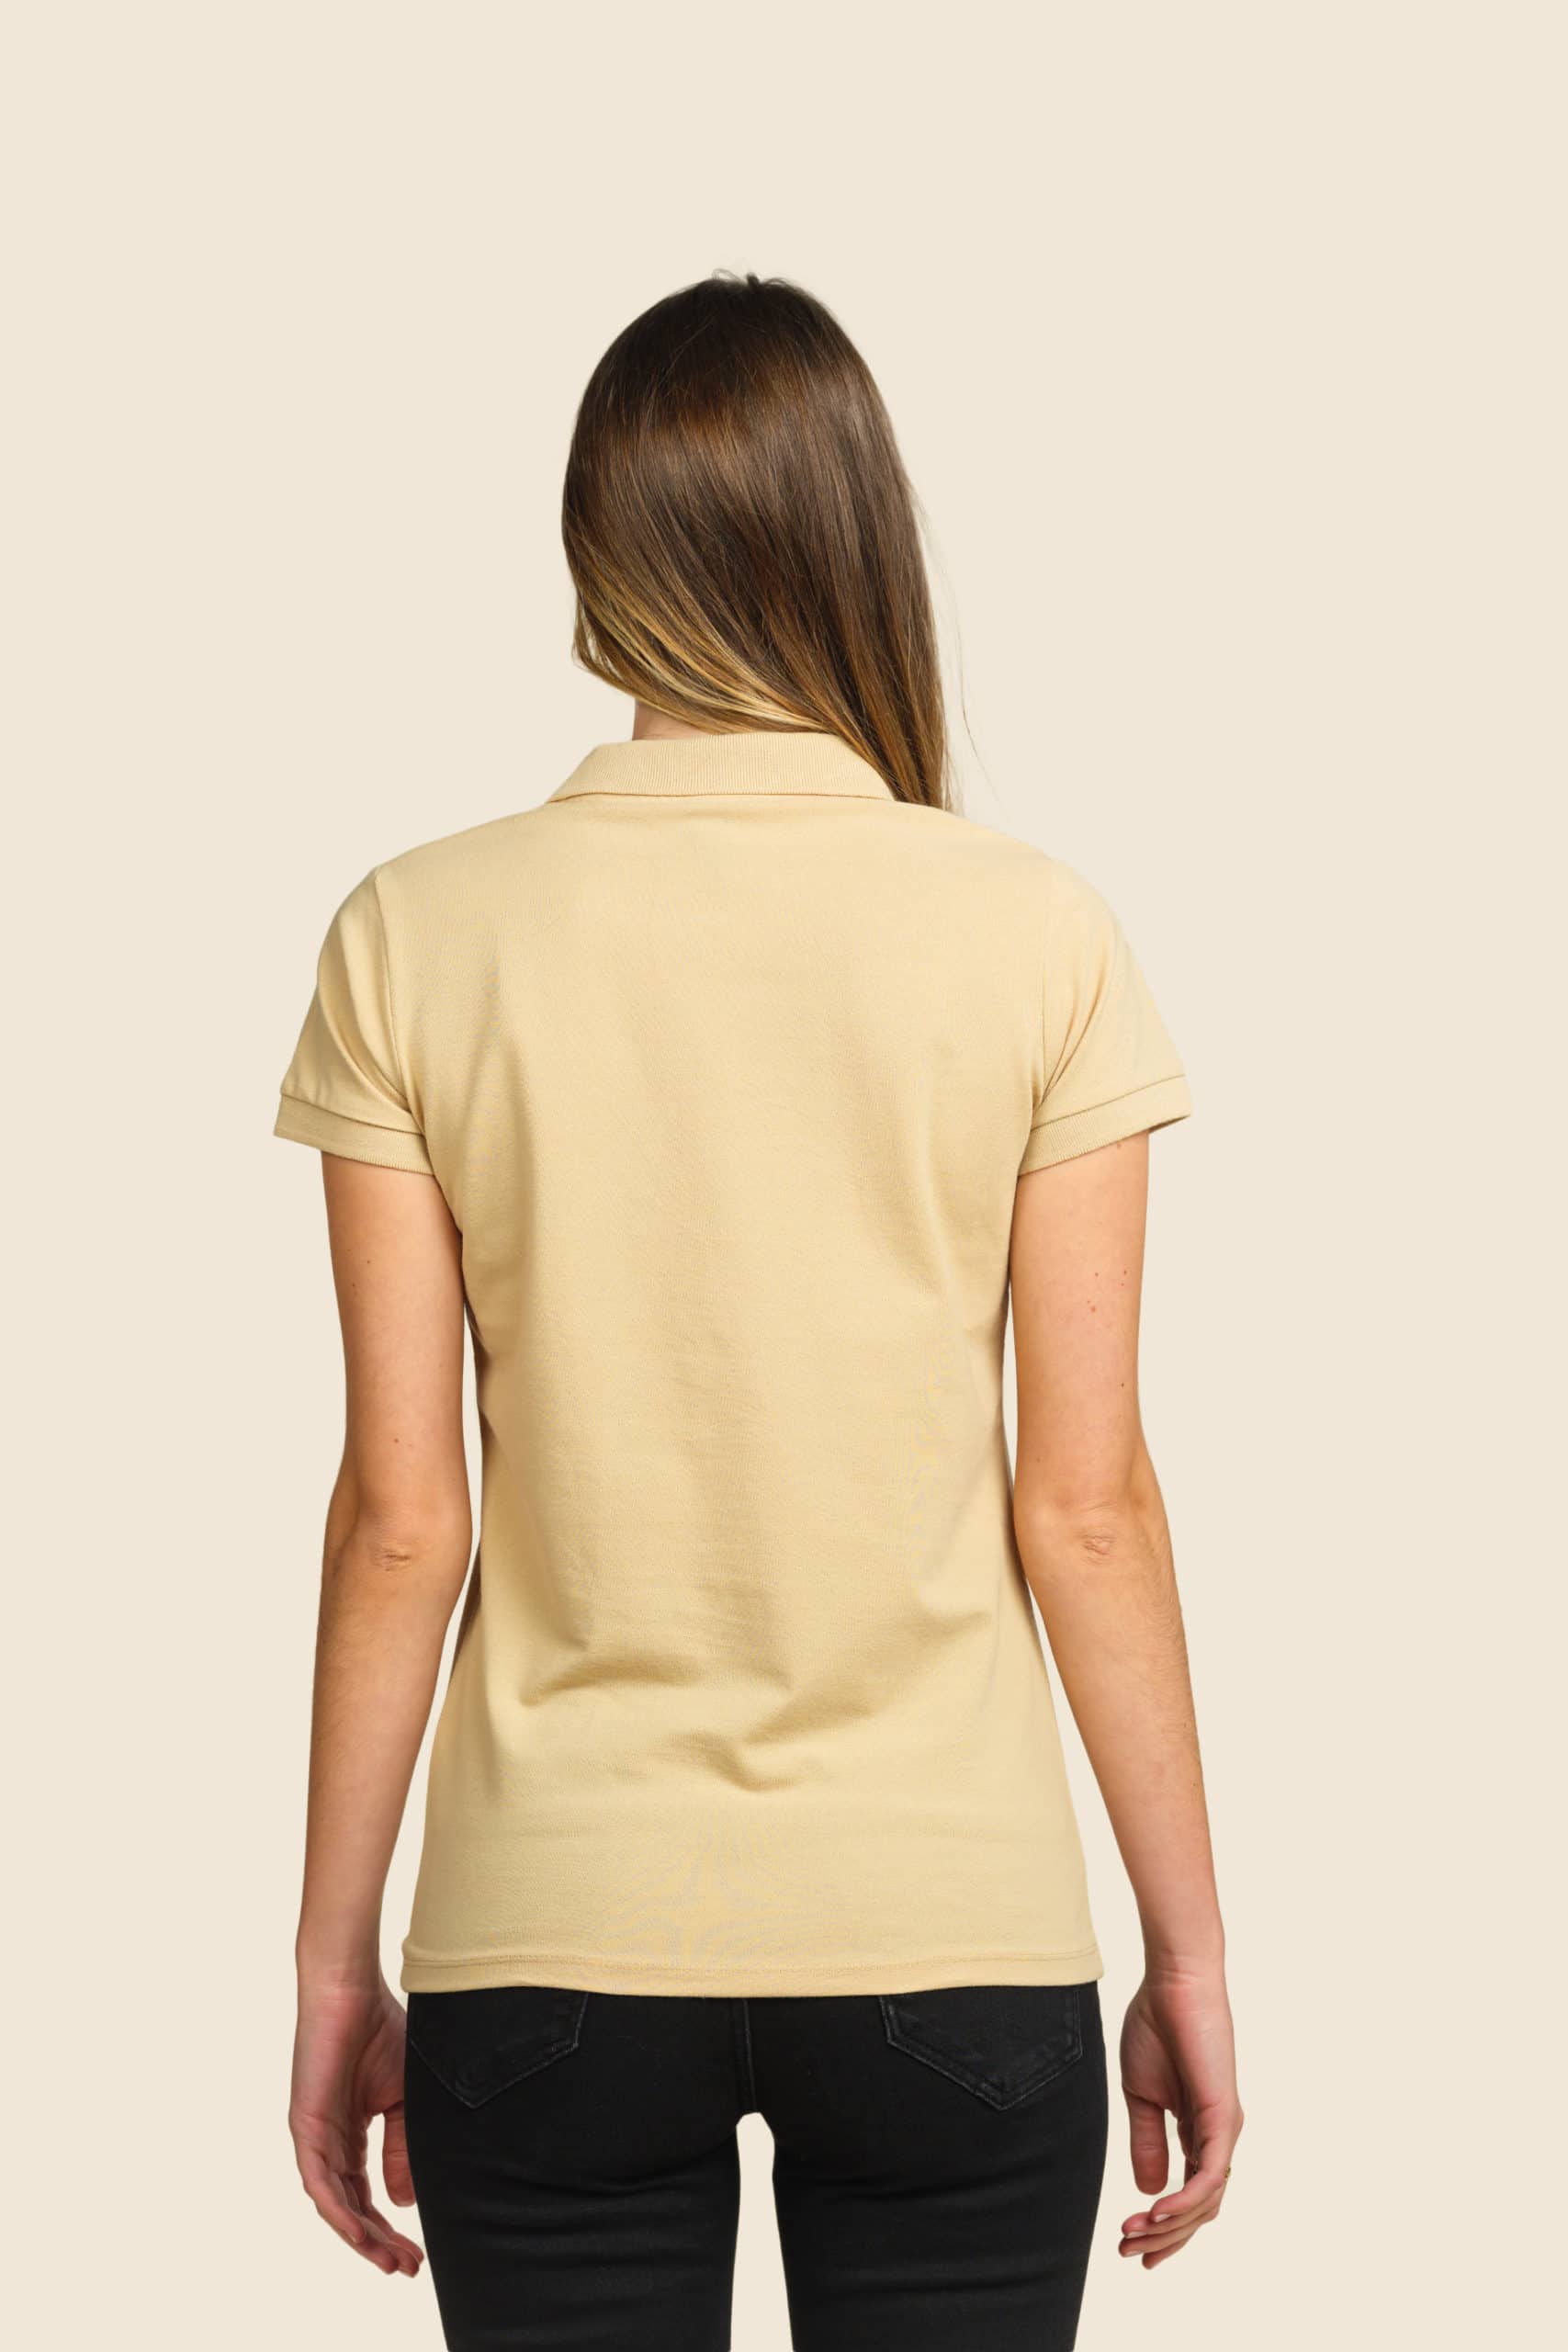 polo bio beige femme personnalisable - Icone Design